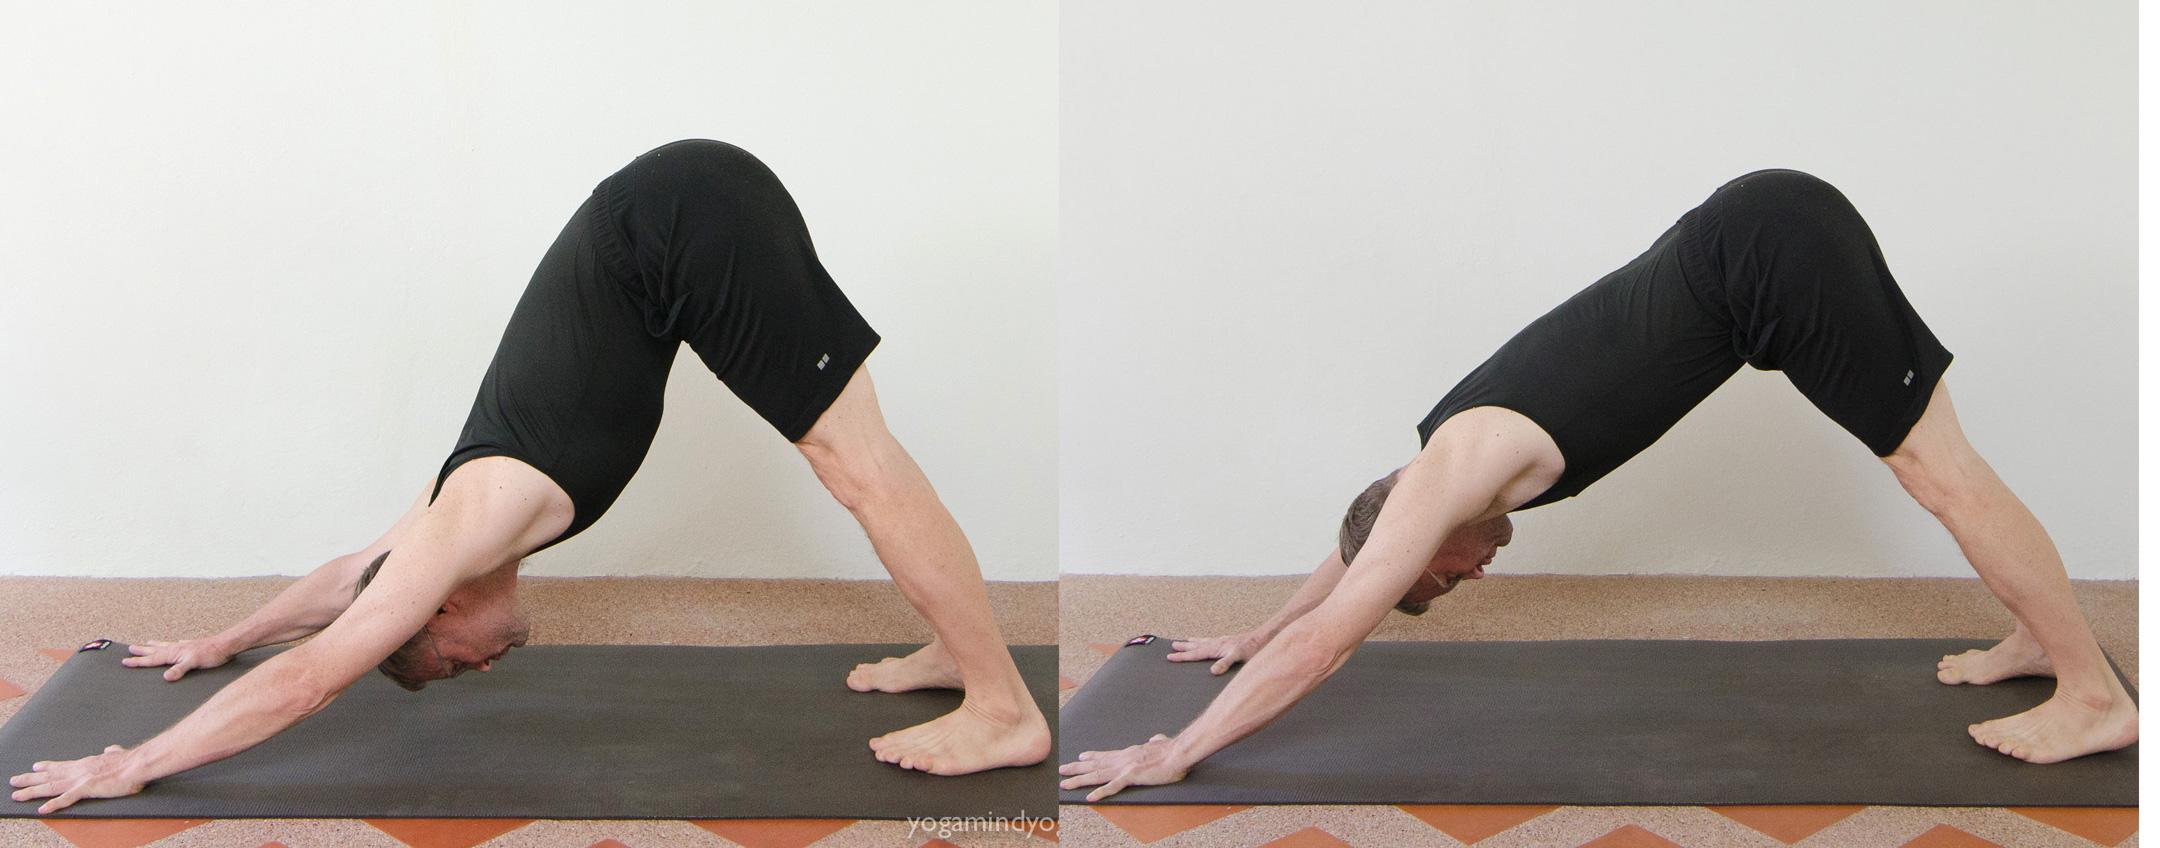 Yoga: Seated single leg side bend